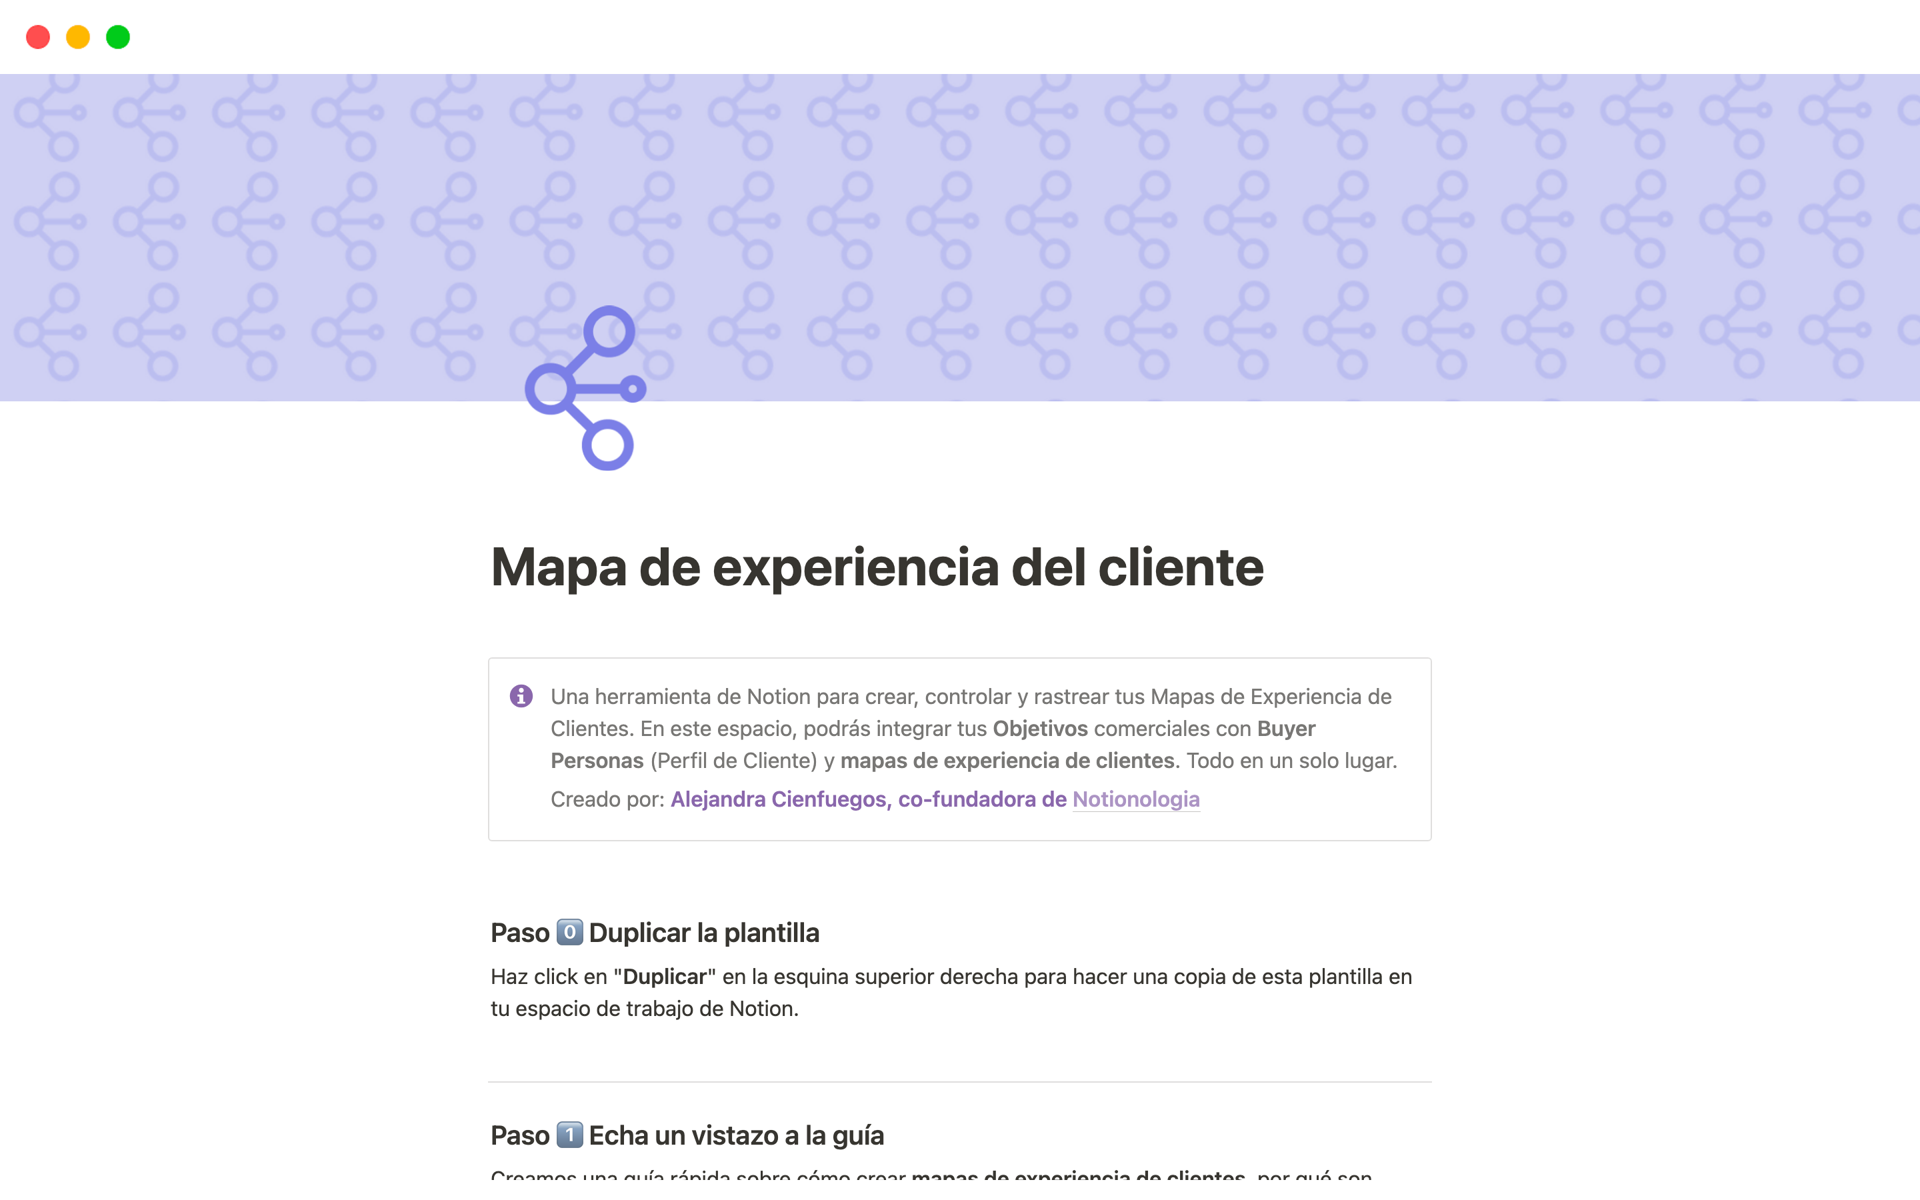 A template preview for Mapa de experiencia del cliente